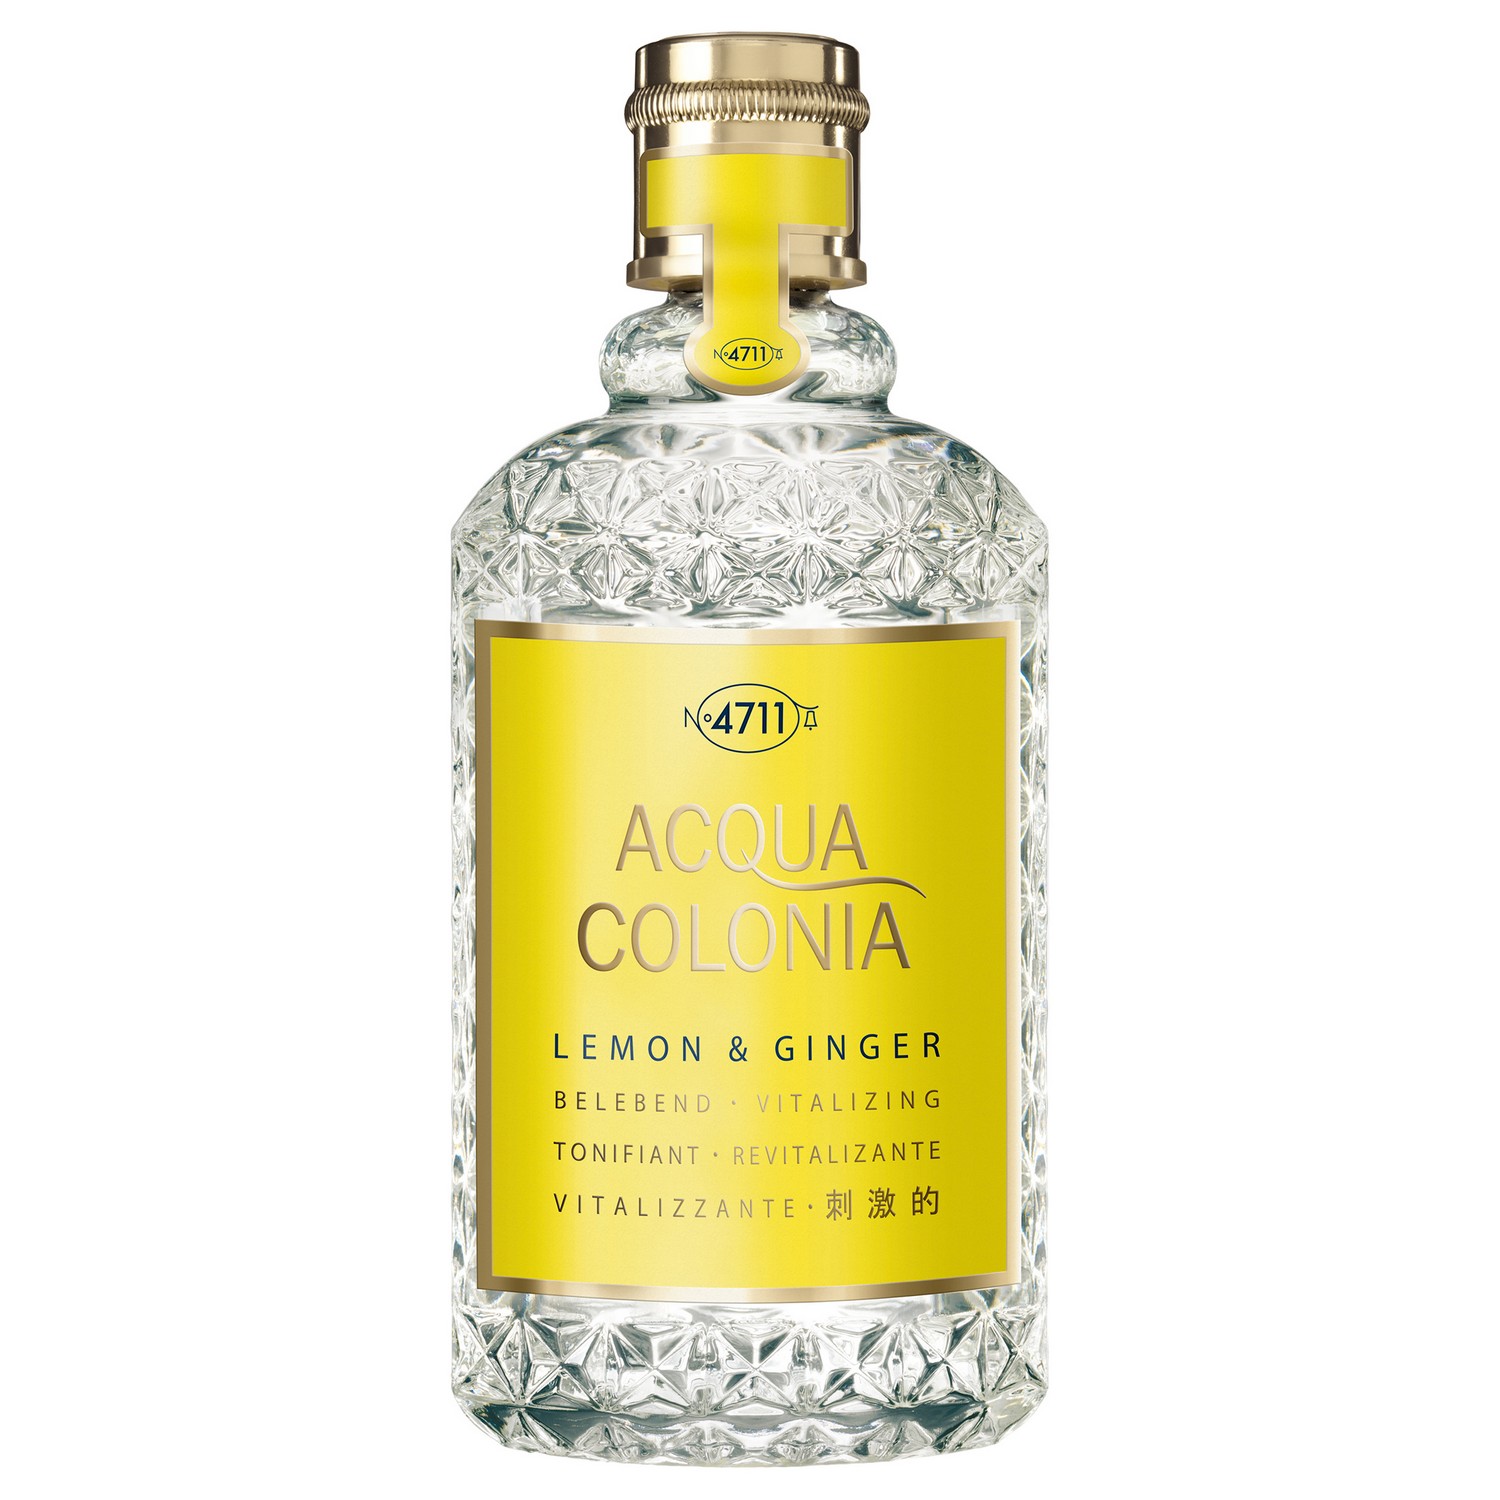 4711 Acqua Colonia Lemon & Ginger Eau de Cologne 170ml